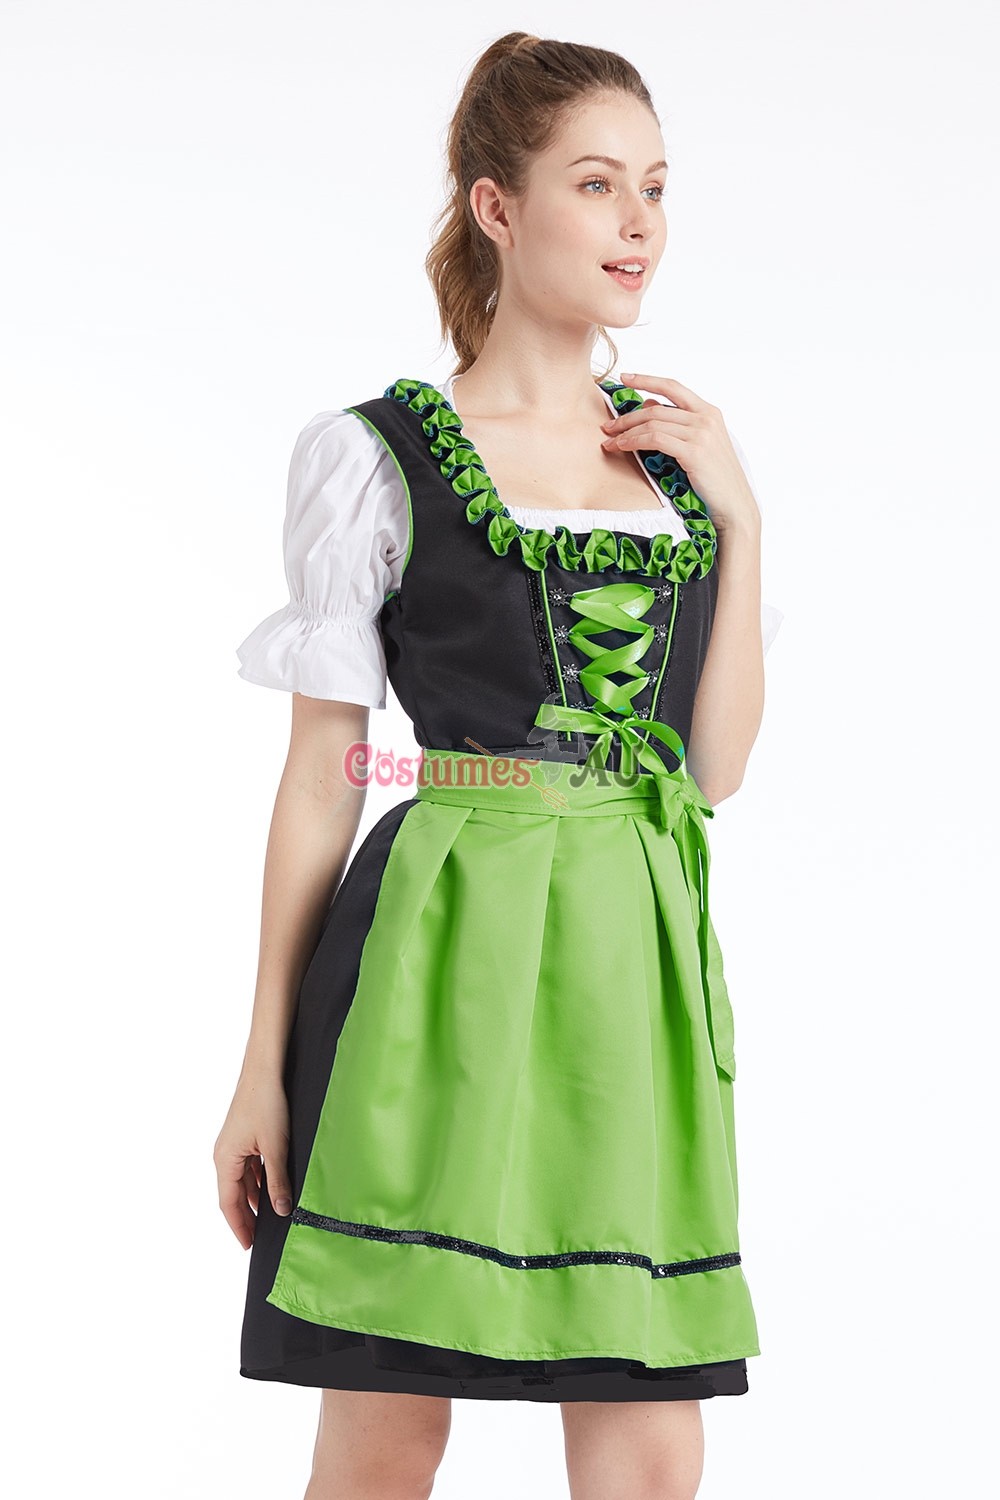 Ladies Beer Maid Oktoberfest Costume Gretchen German Fancy Dress Heidi Wench 